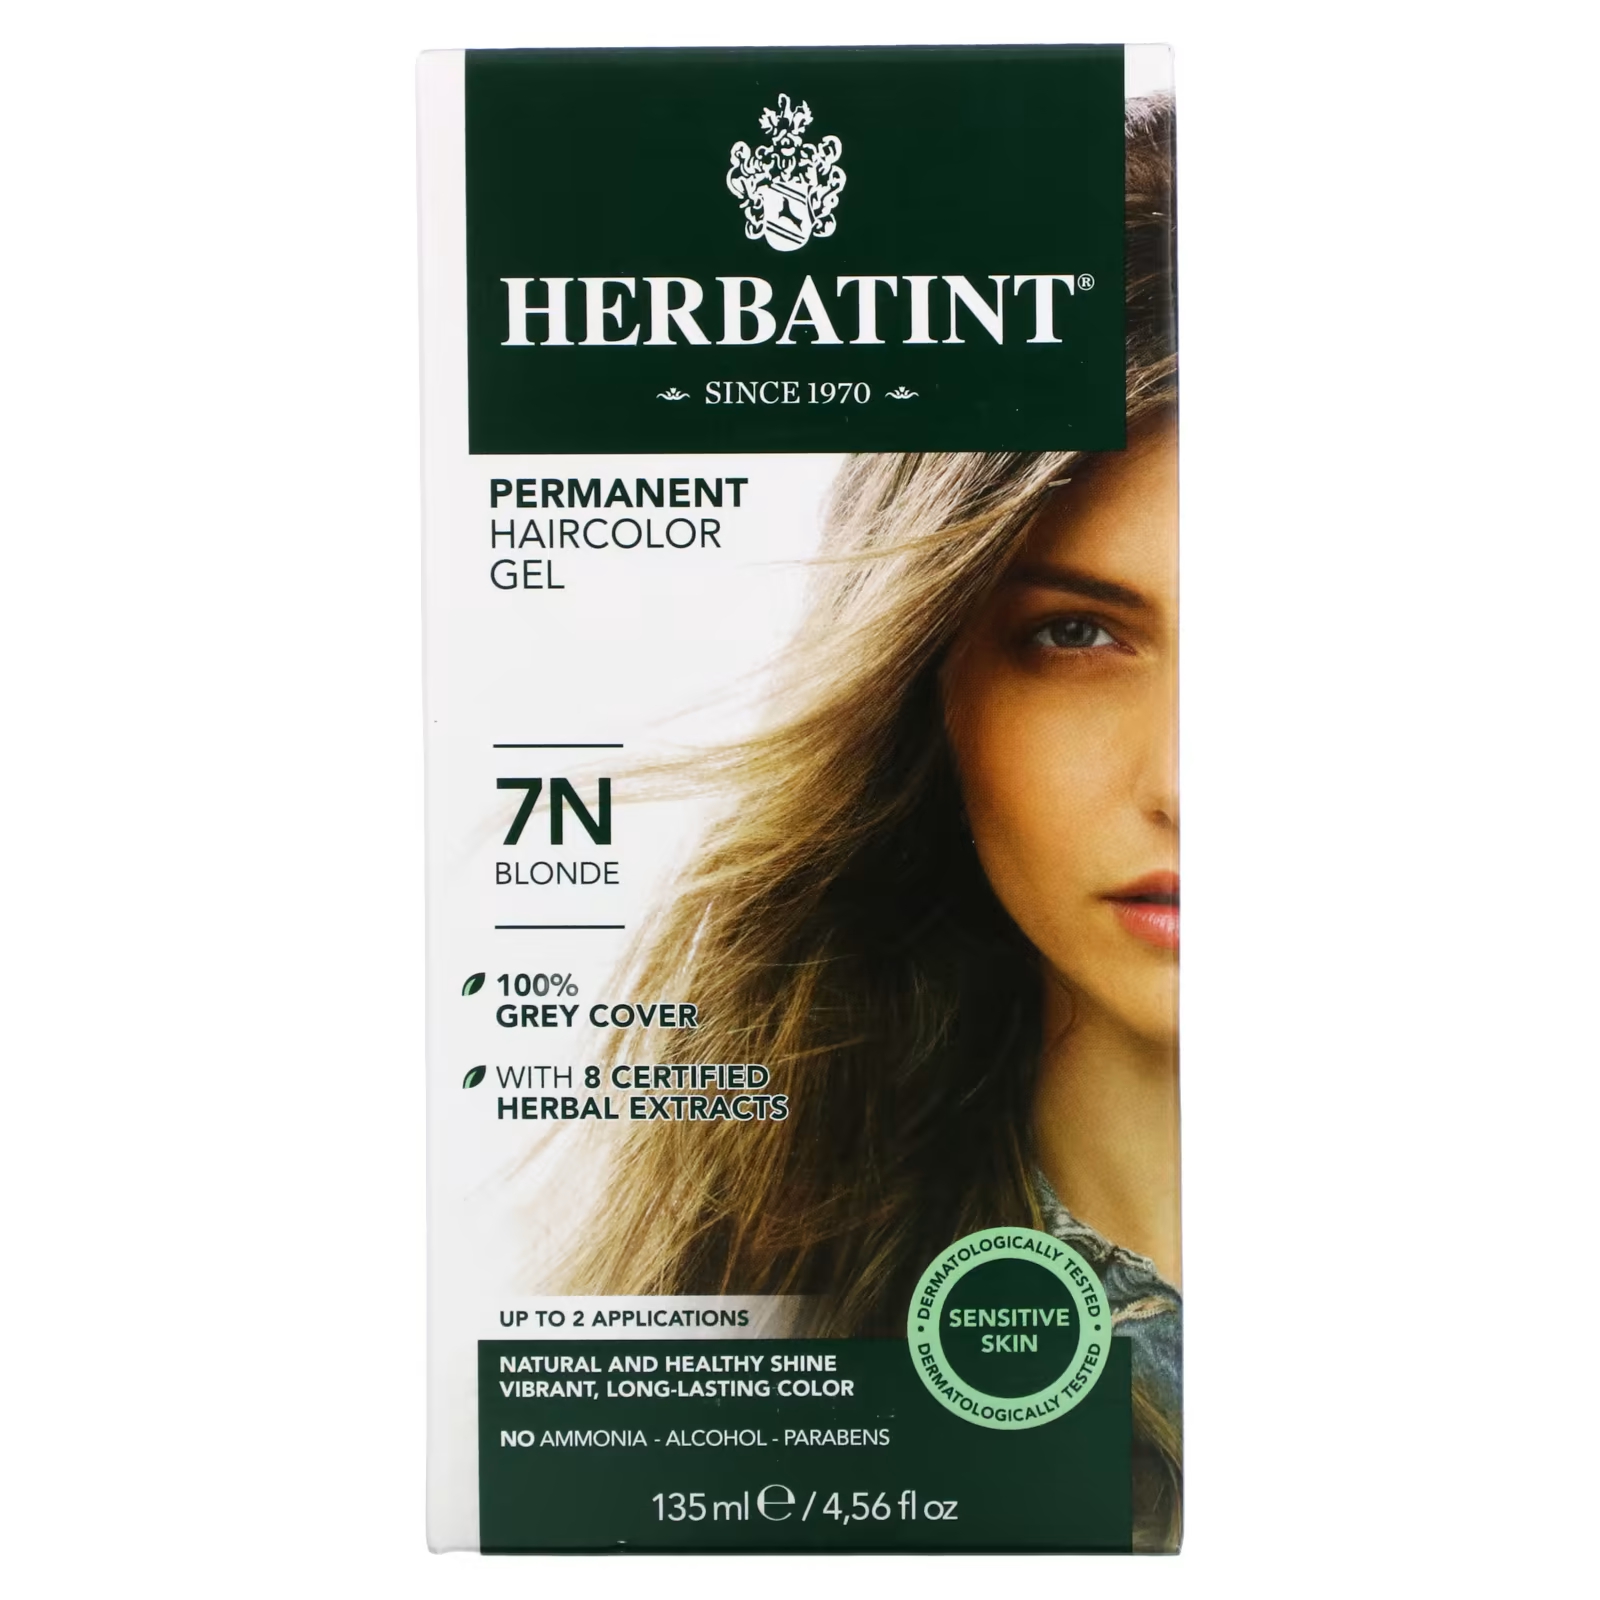 Перманентная гель-краска для волос Herbatint 7N Blonde, 135 мл herbatint перманентная гель краска для волос 6d темный золотой блондин 135 мл